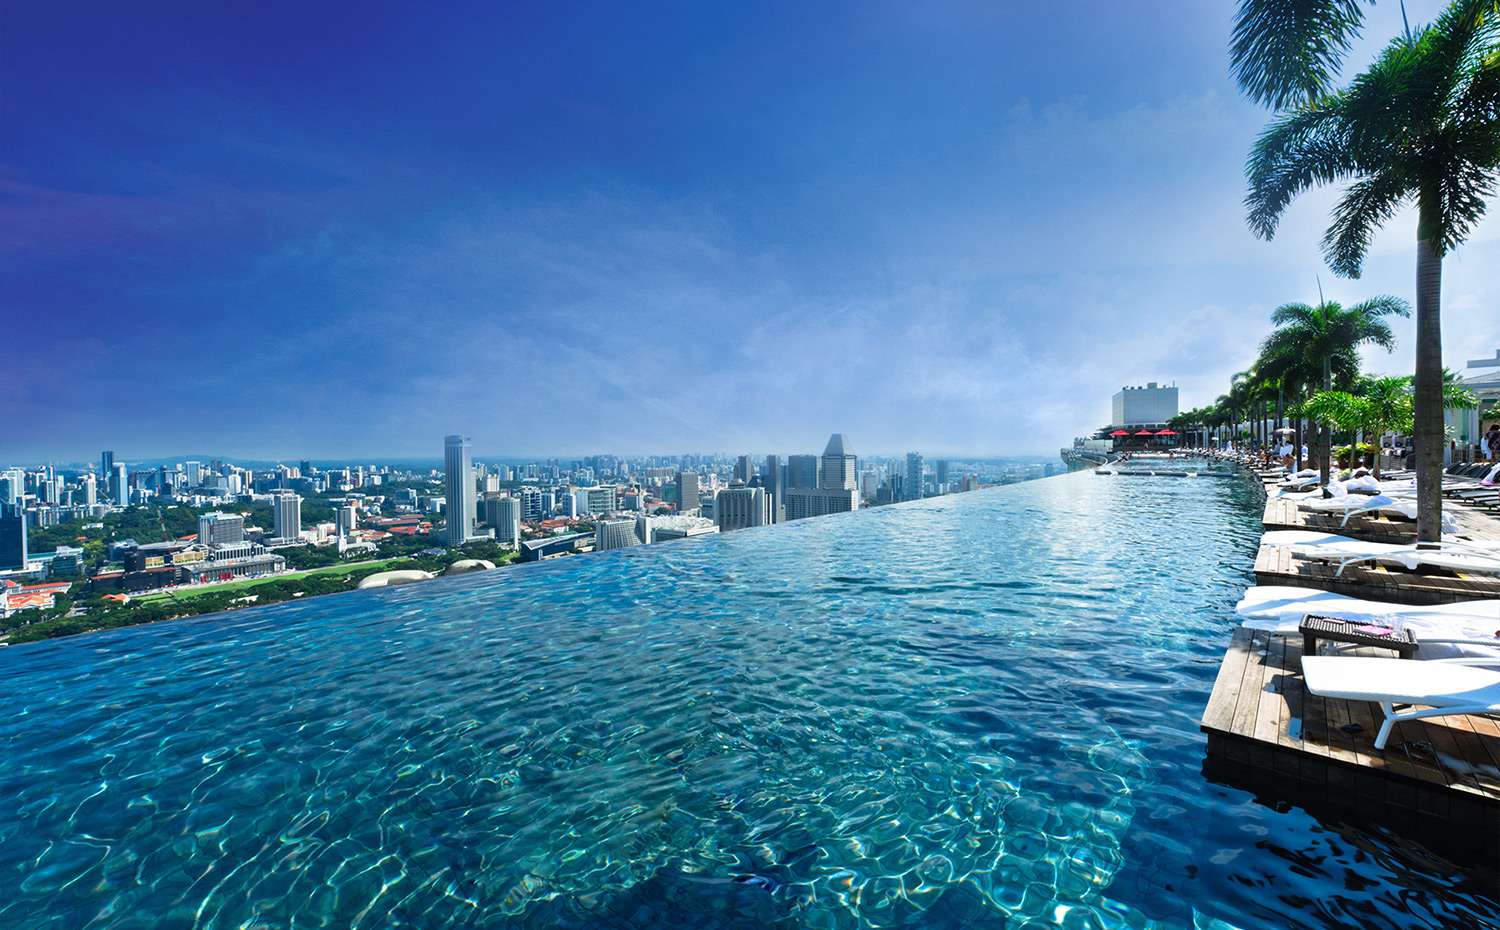 Spring Savings Hotel Offer at Marina Bay Sands